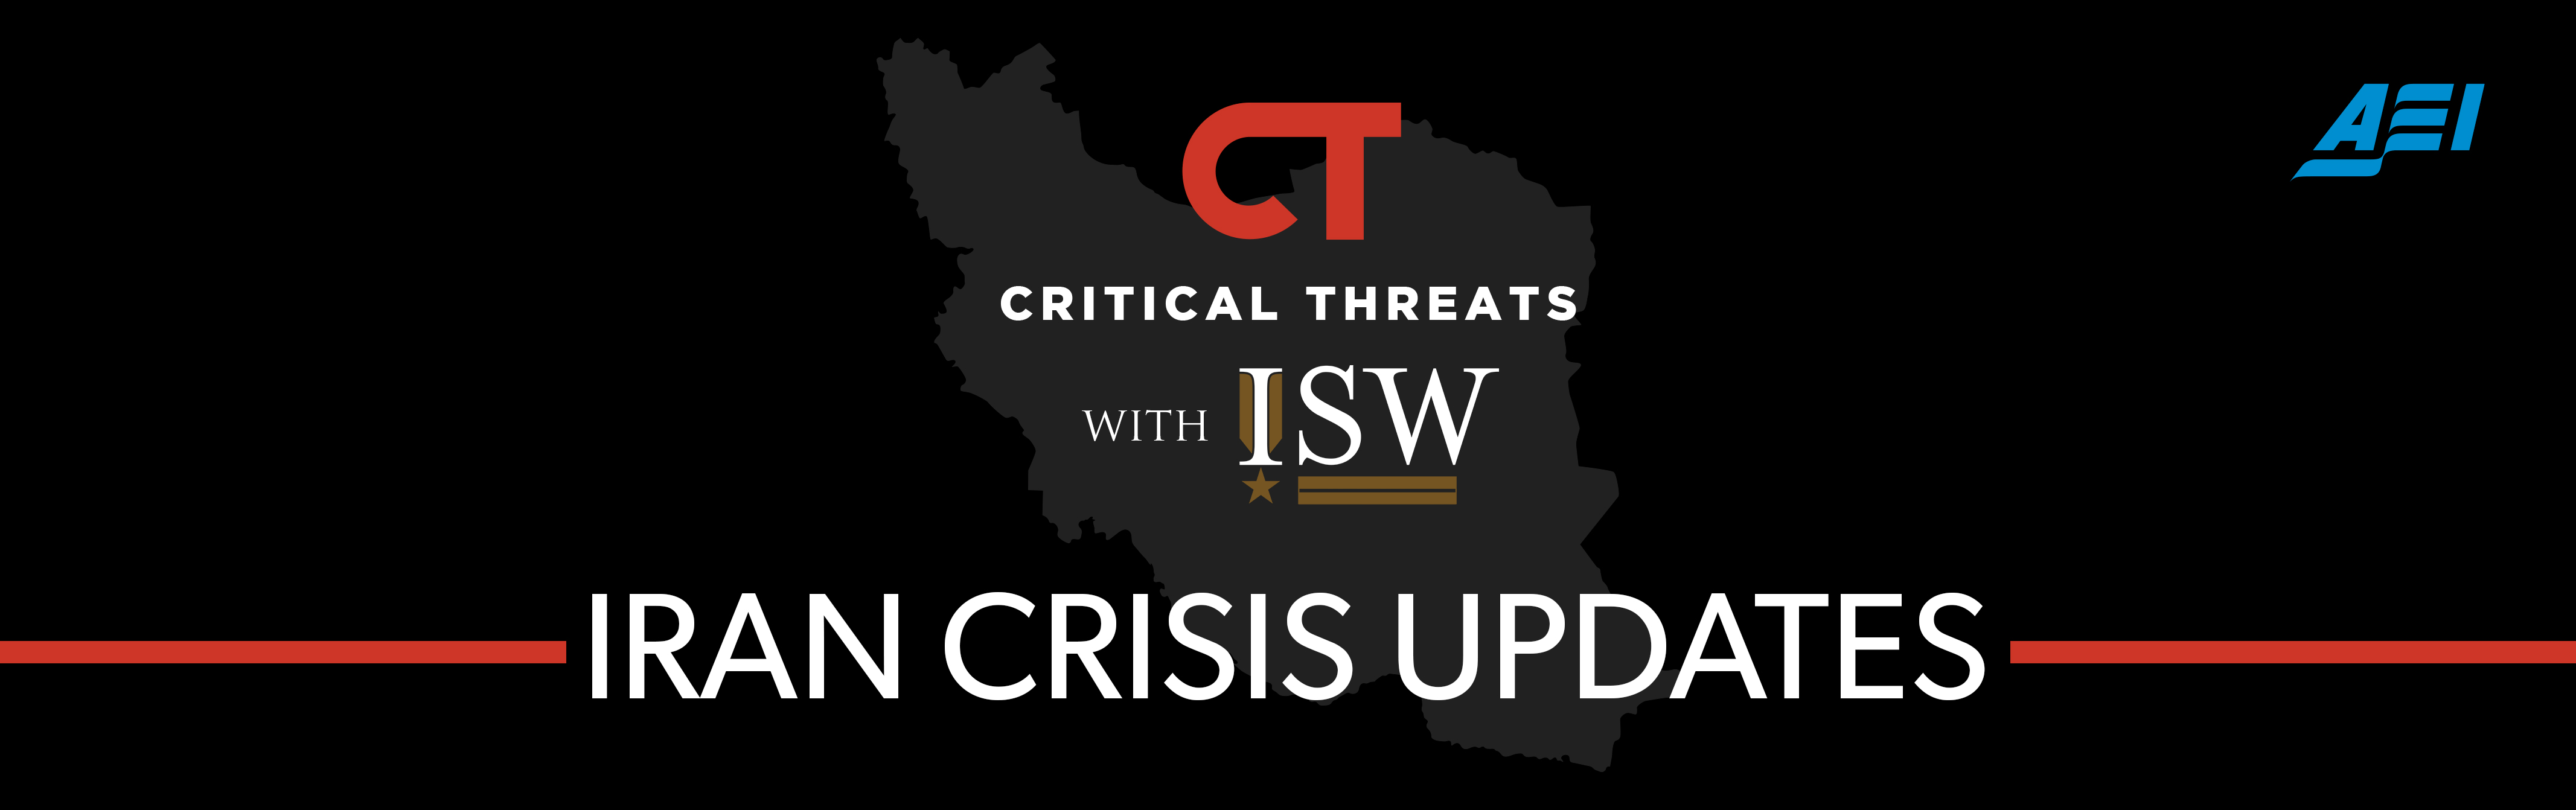 Iran Crisis Updates Critical Threats pic